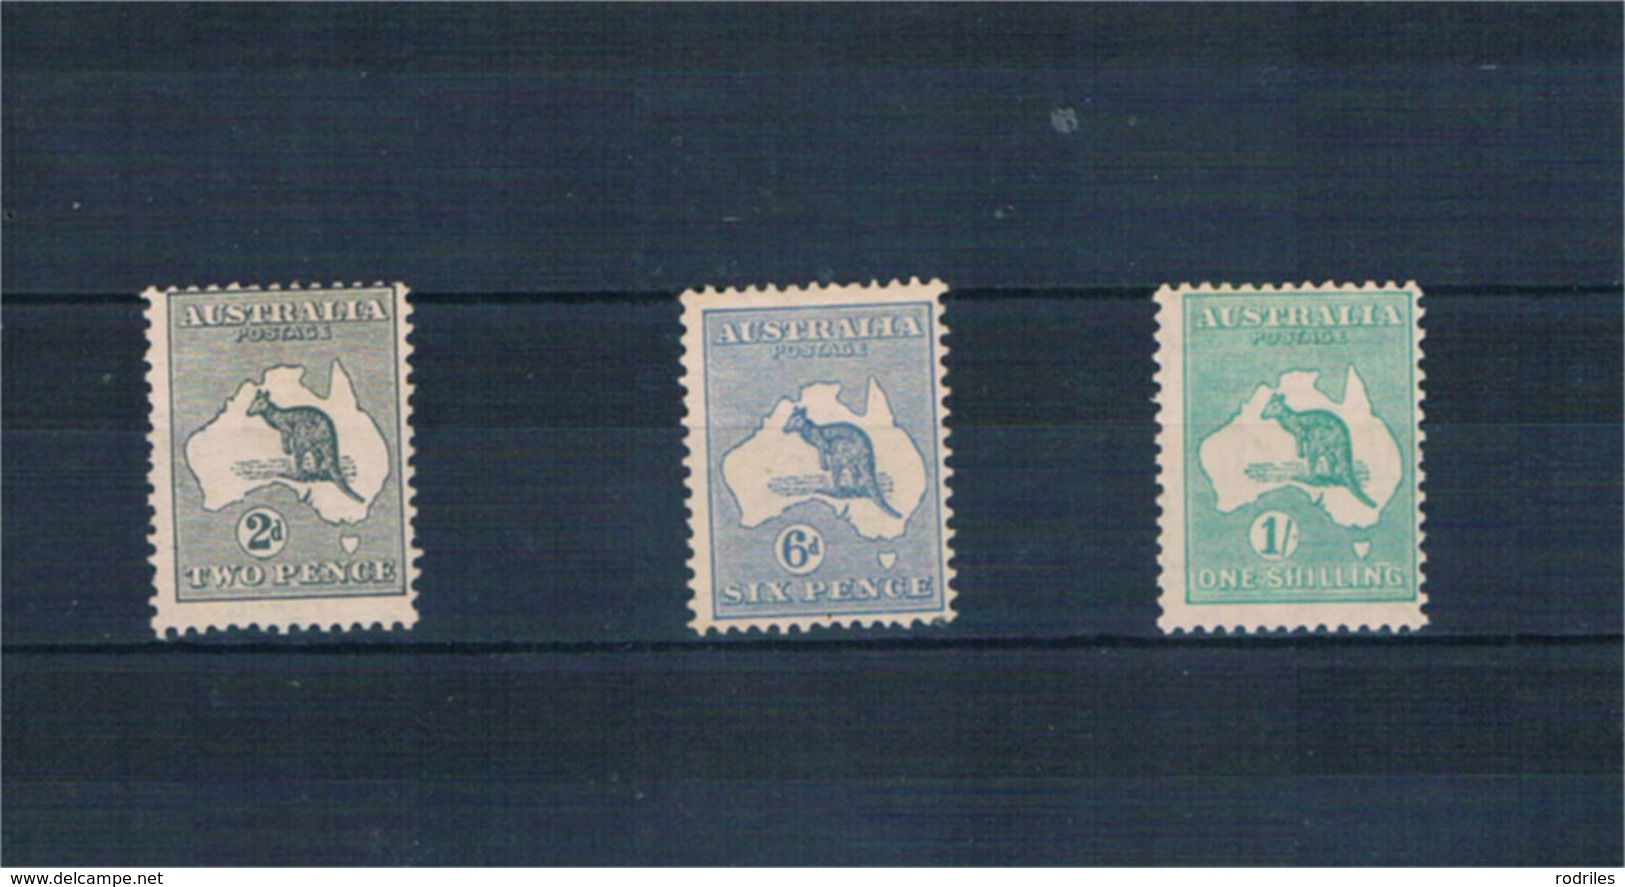 Australia. Tres Valores Nuevos De La Serie De Canguros 2 D-6d Y 1/. Valor De Catalogo Es 175 Euros - Mint Stamps